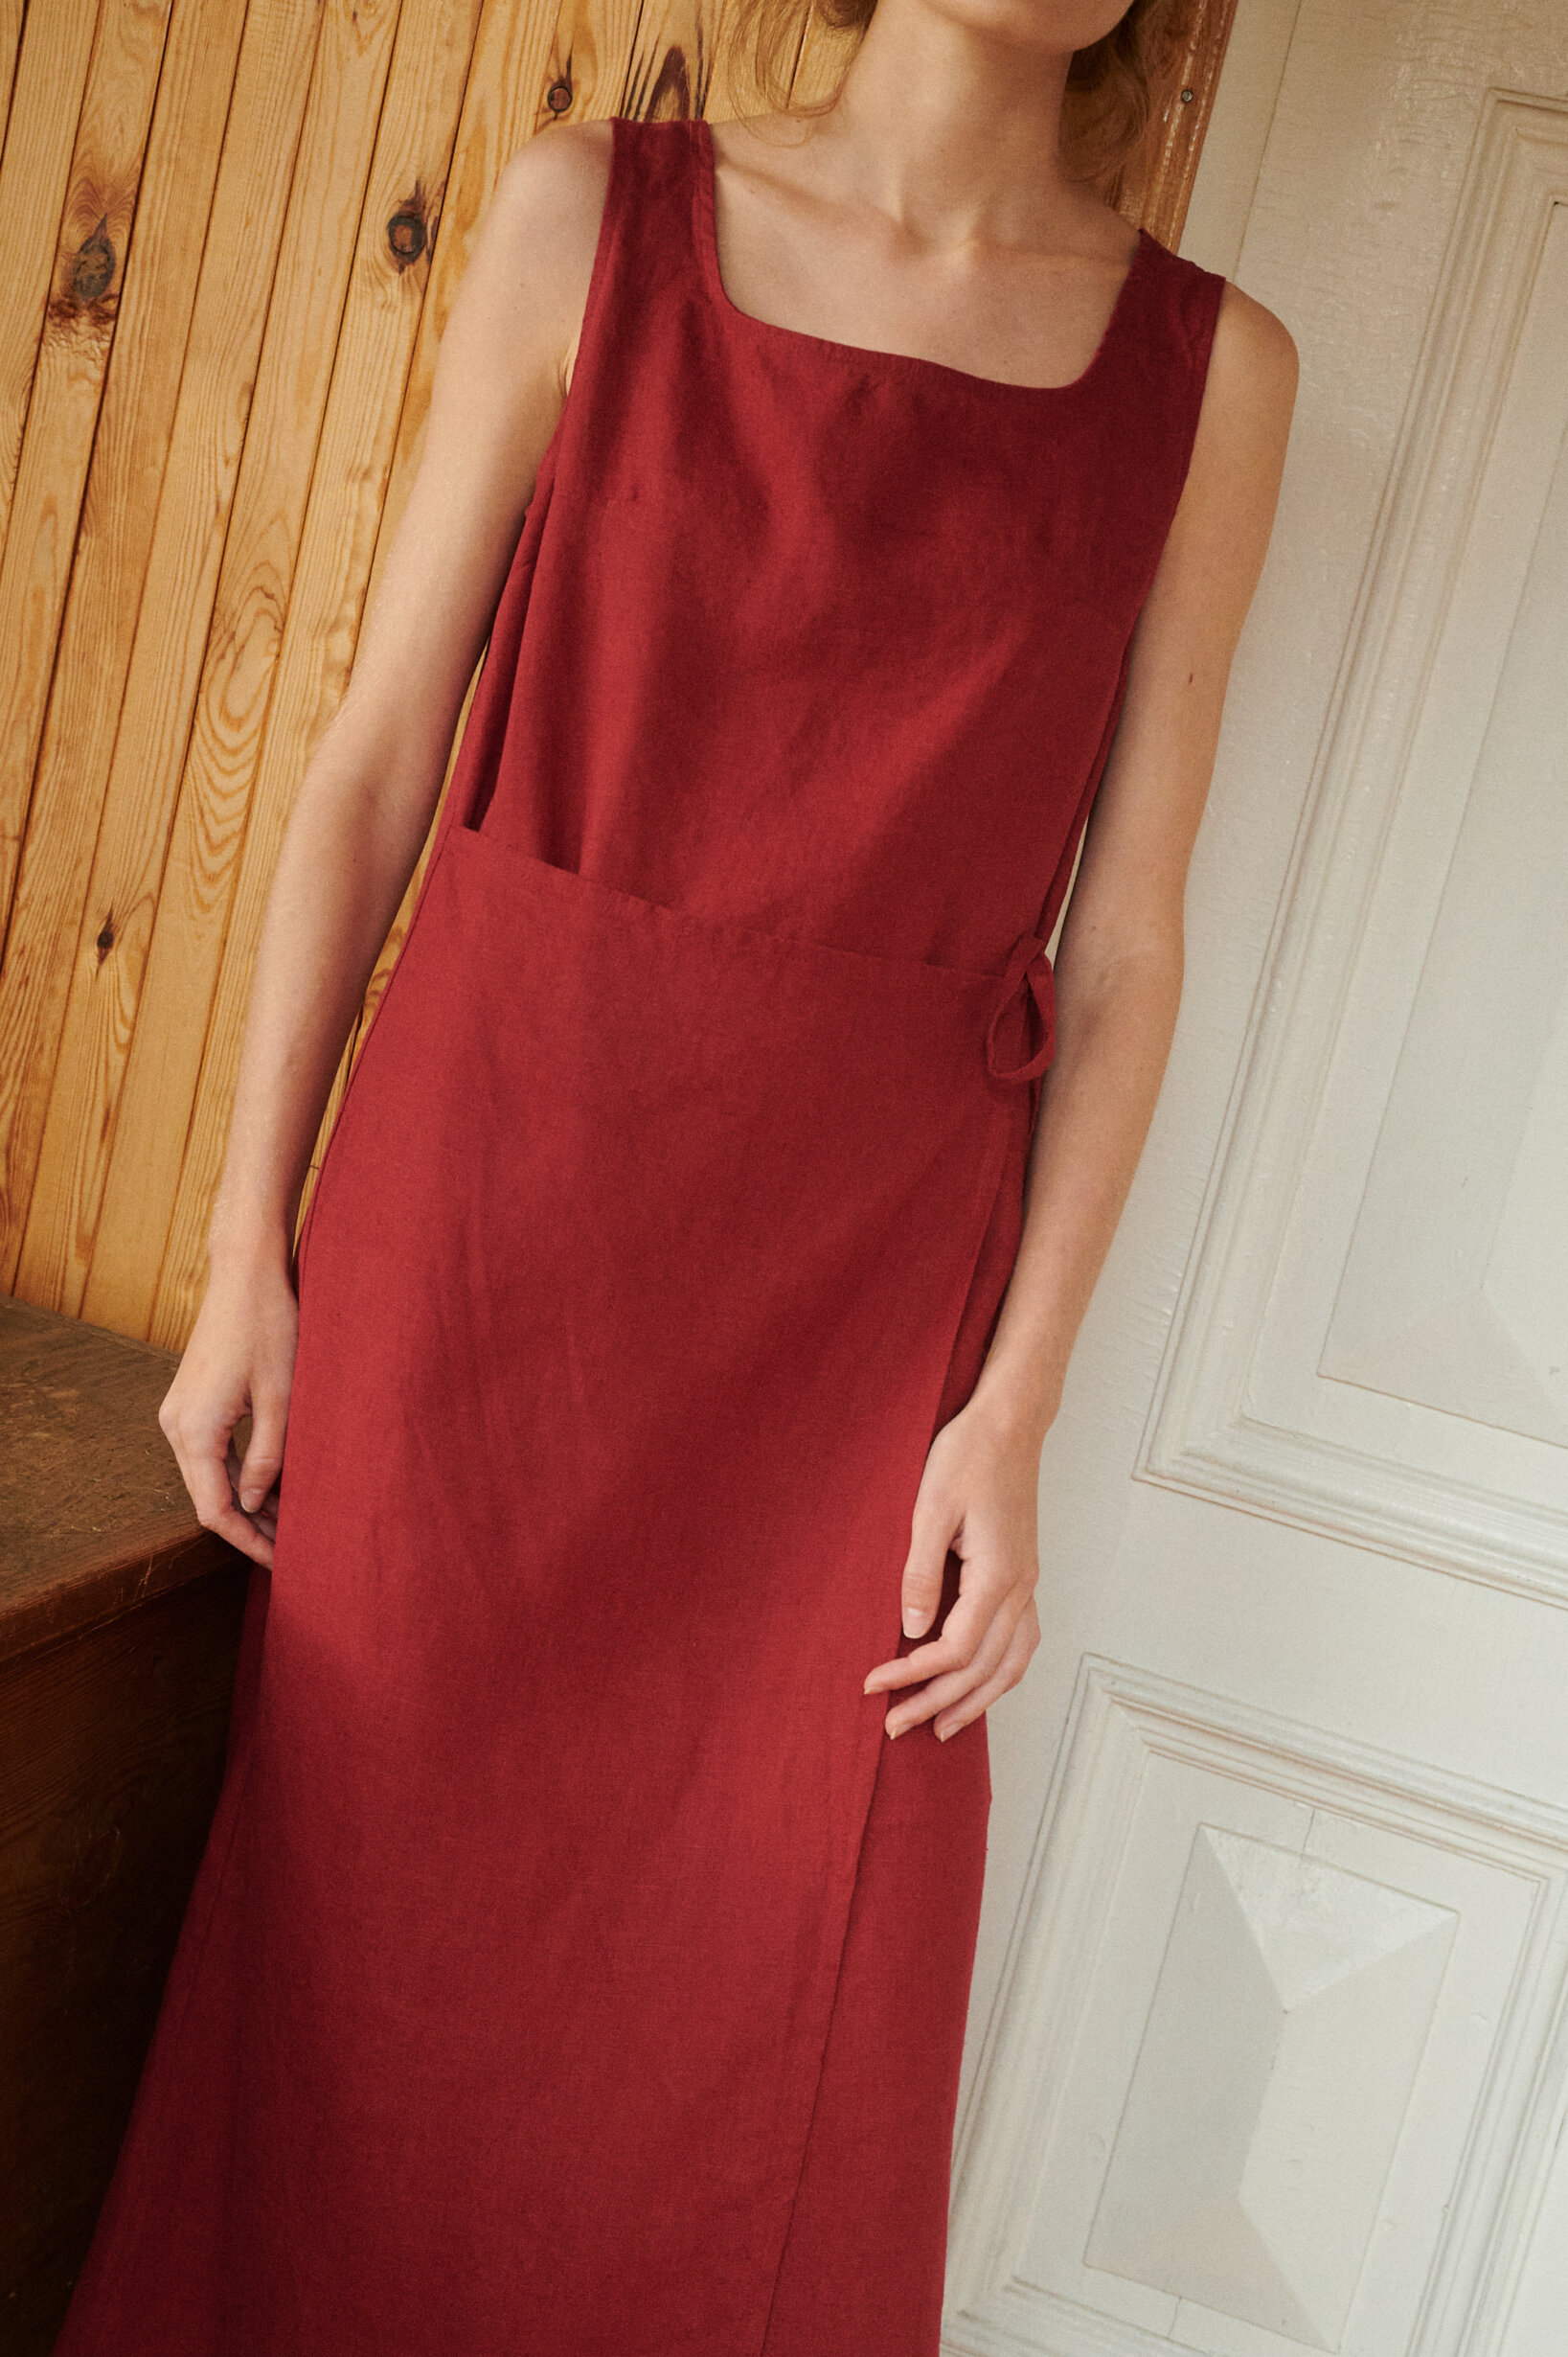 a close up of a woman wearing sleeveless summer wrap dress in burgundy red linen